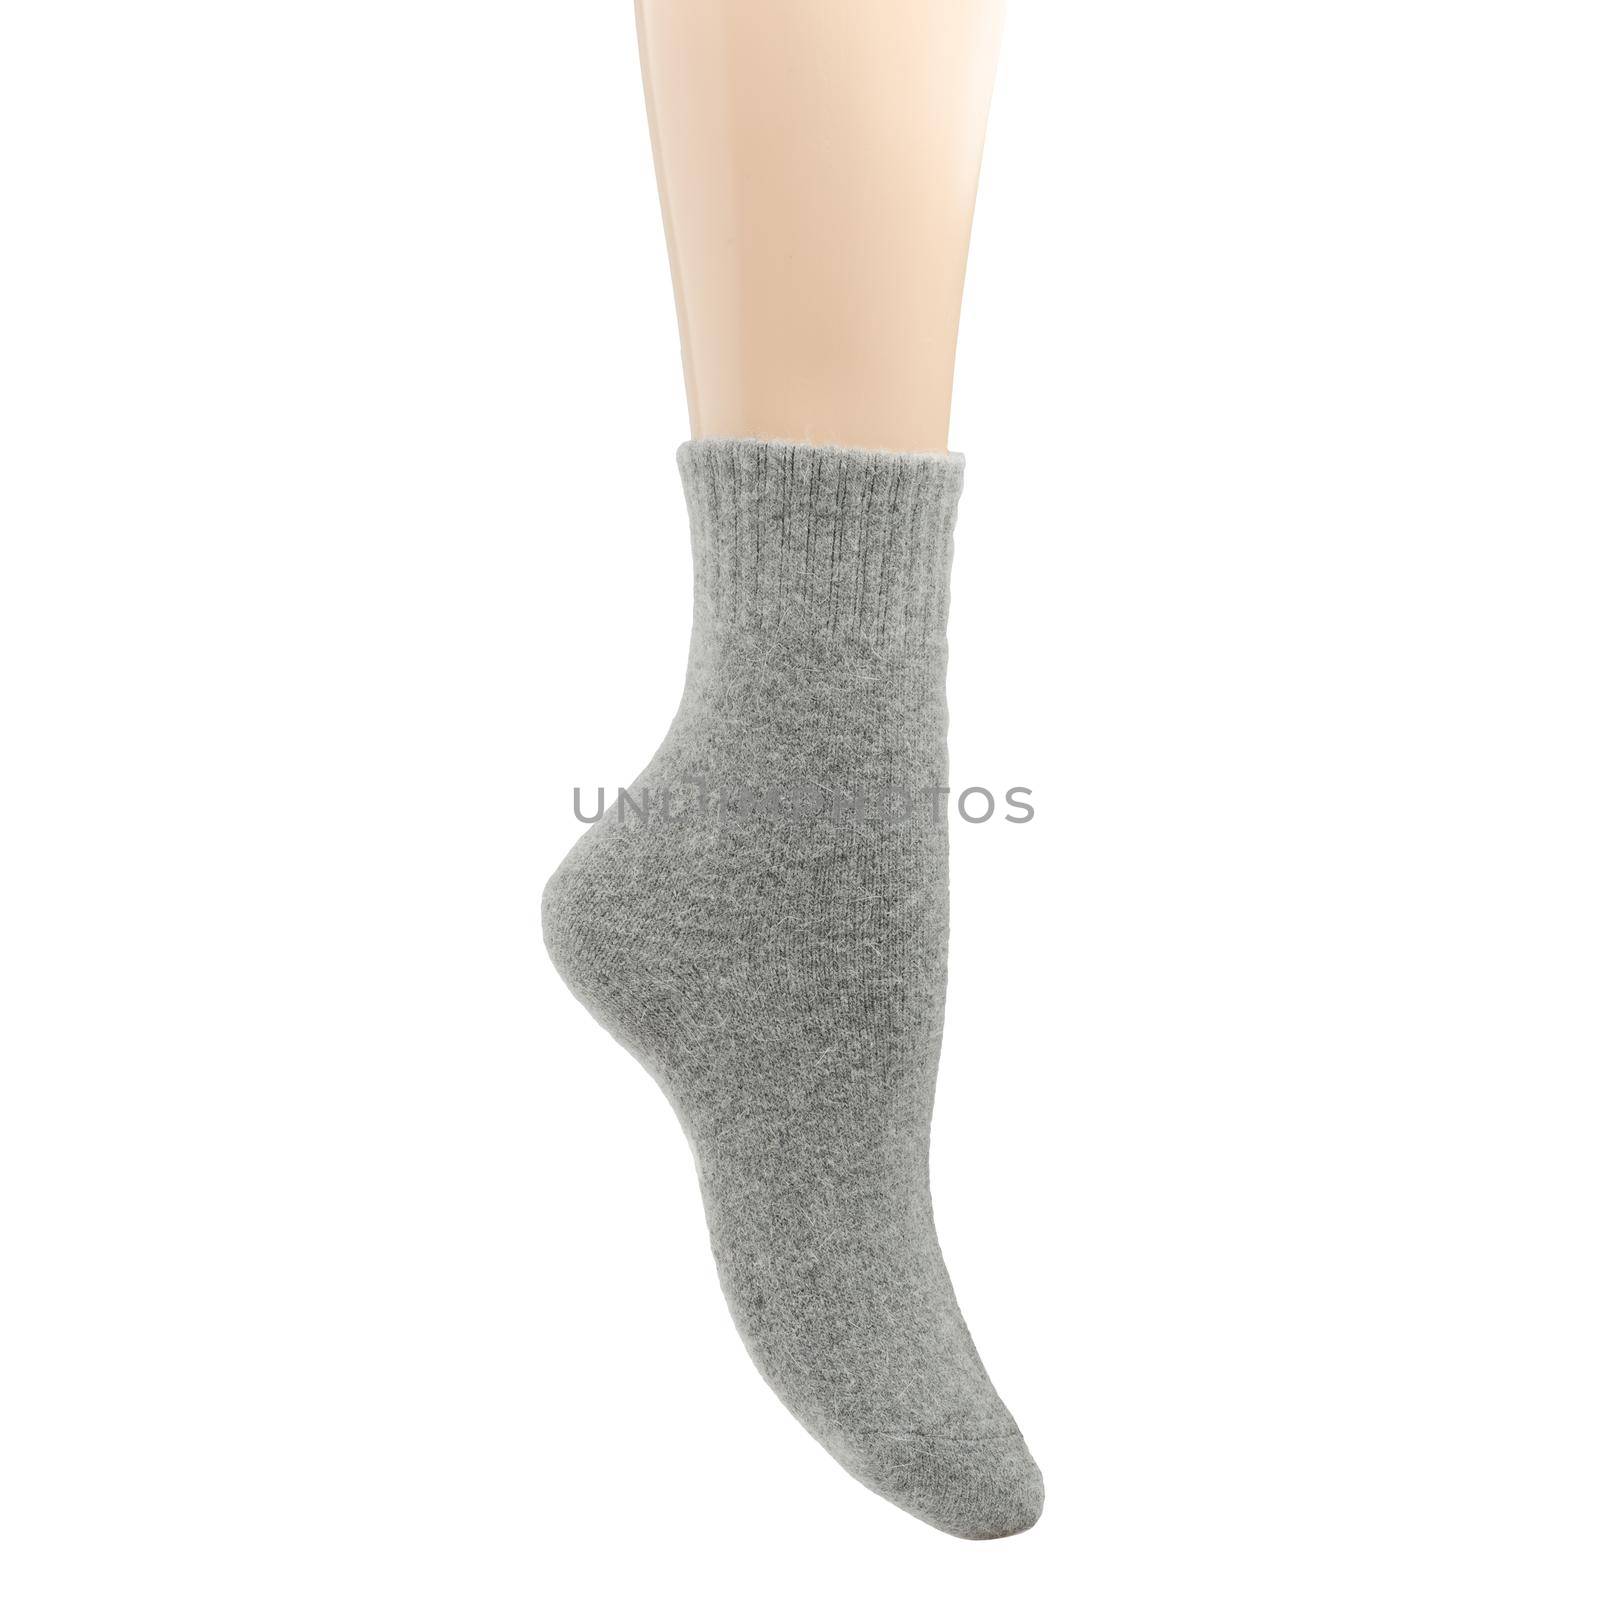 Socks on mannequin isolated on white